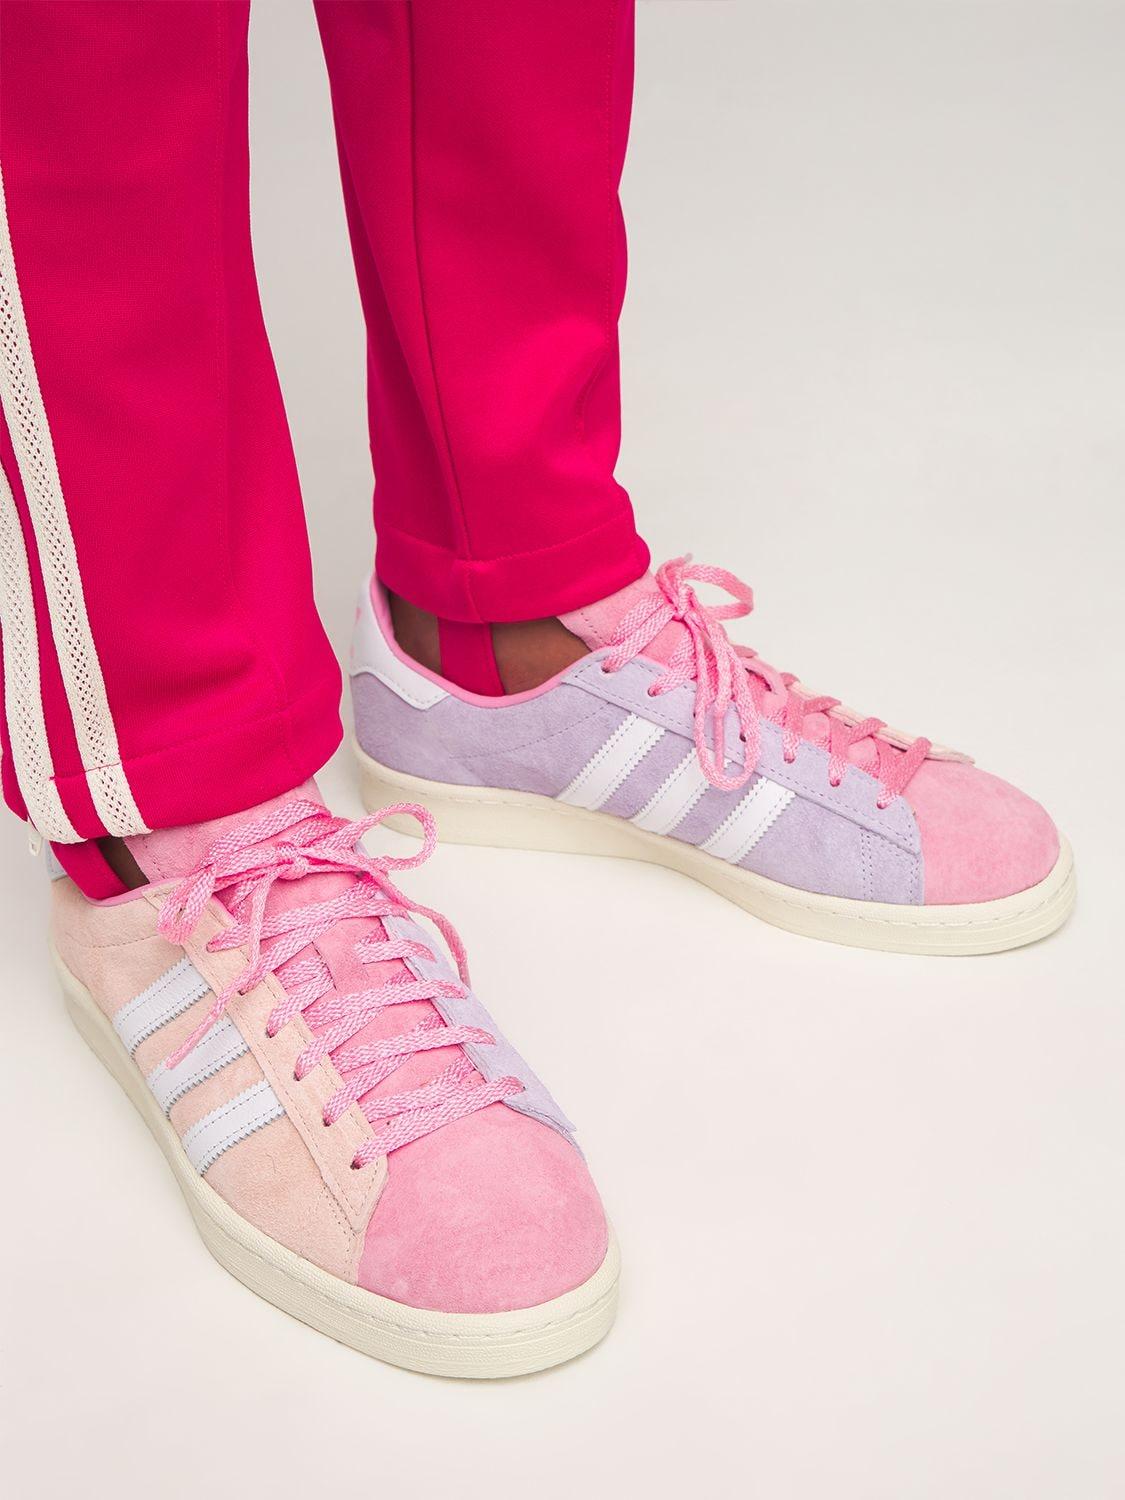 adidas Originals Campus 80s Sneakers in Pink | Lyst